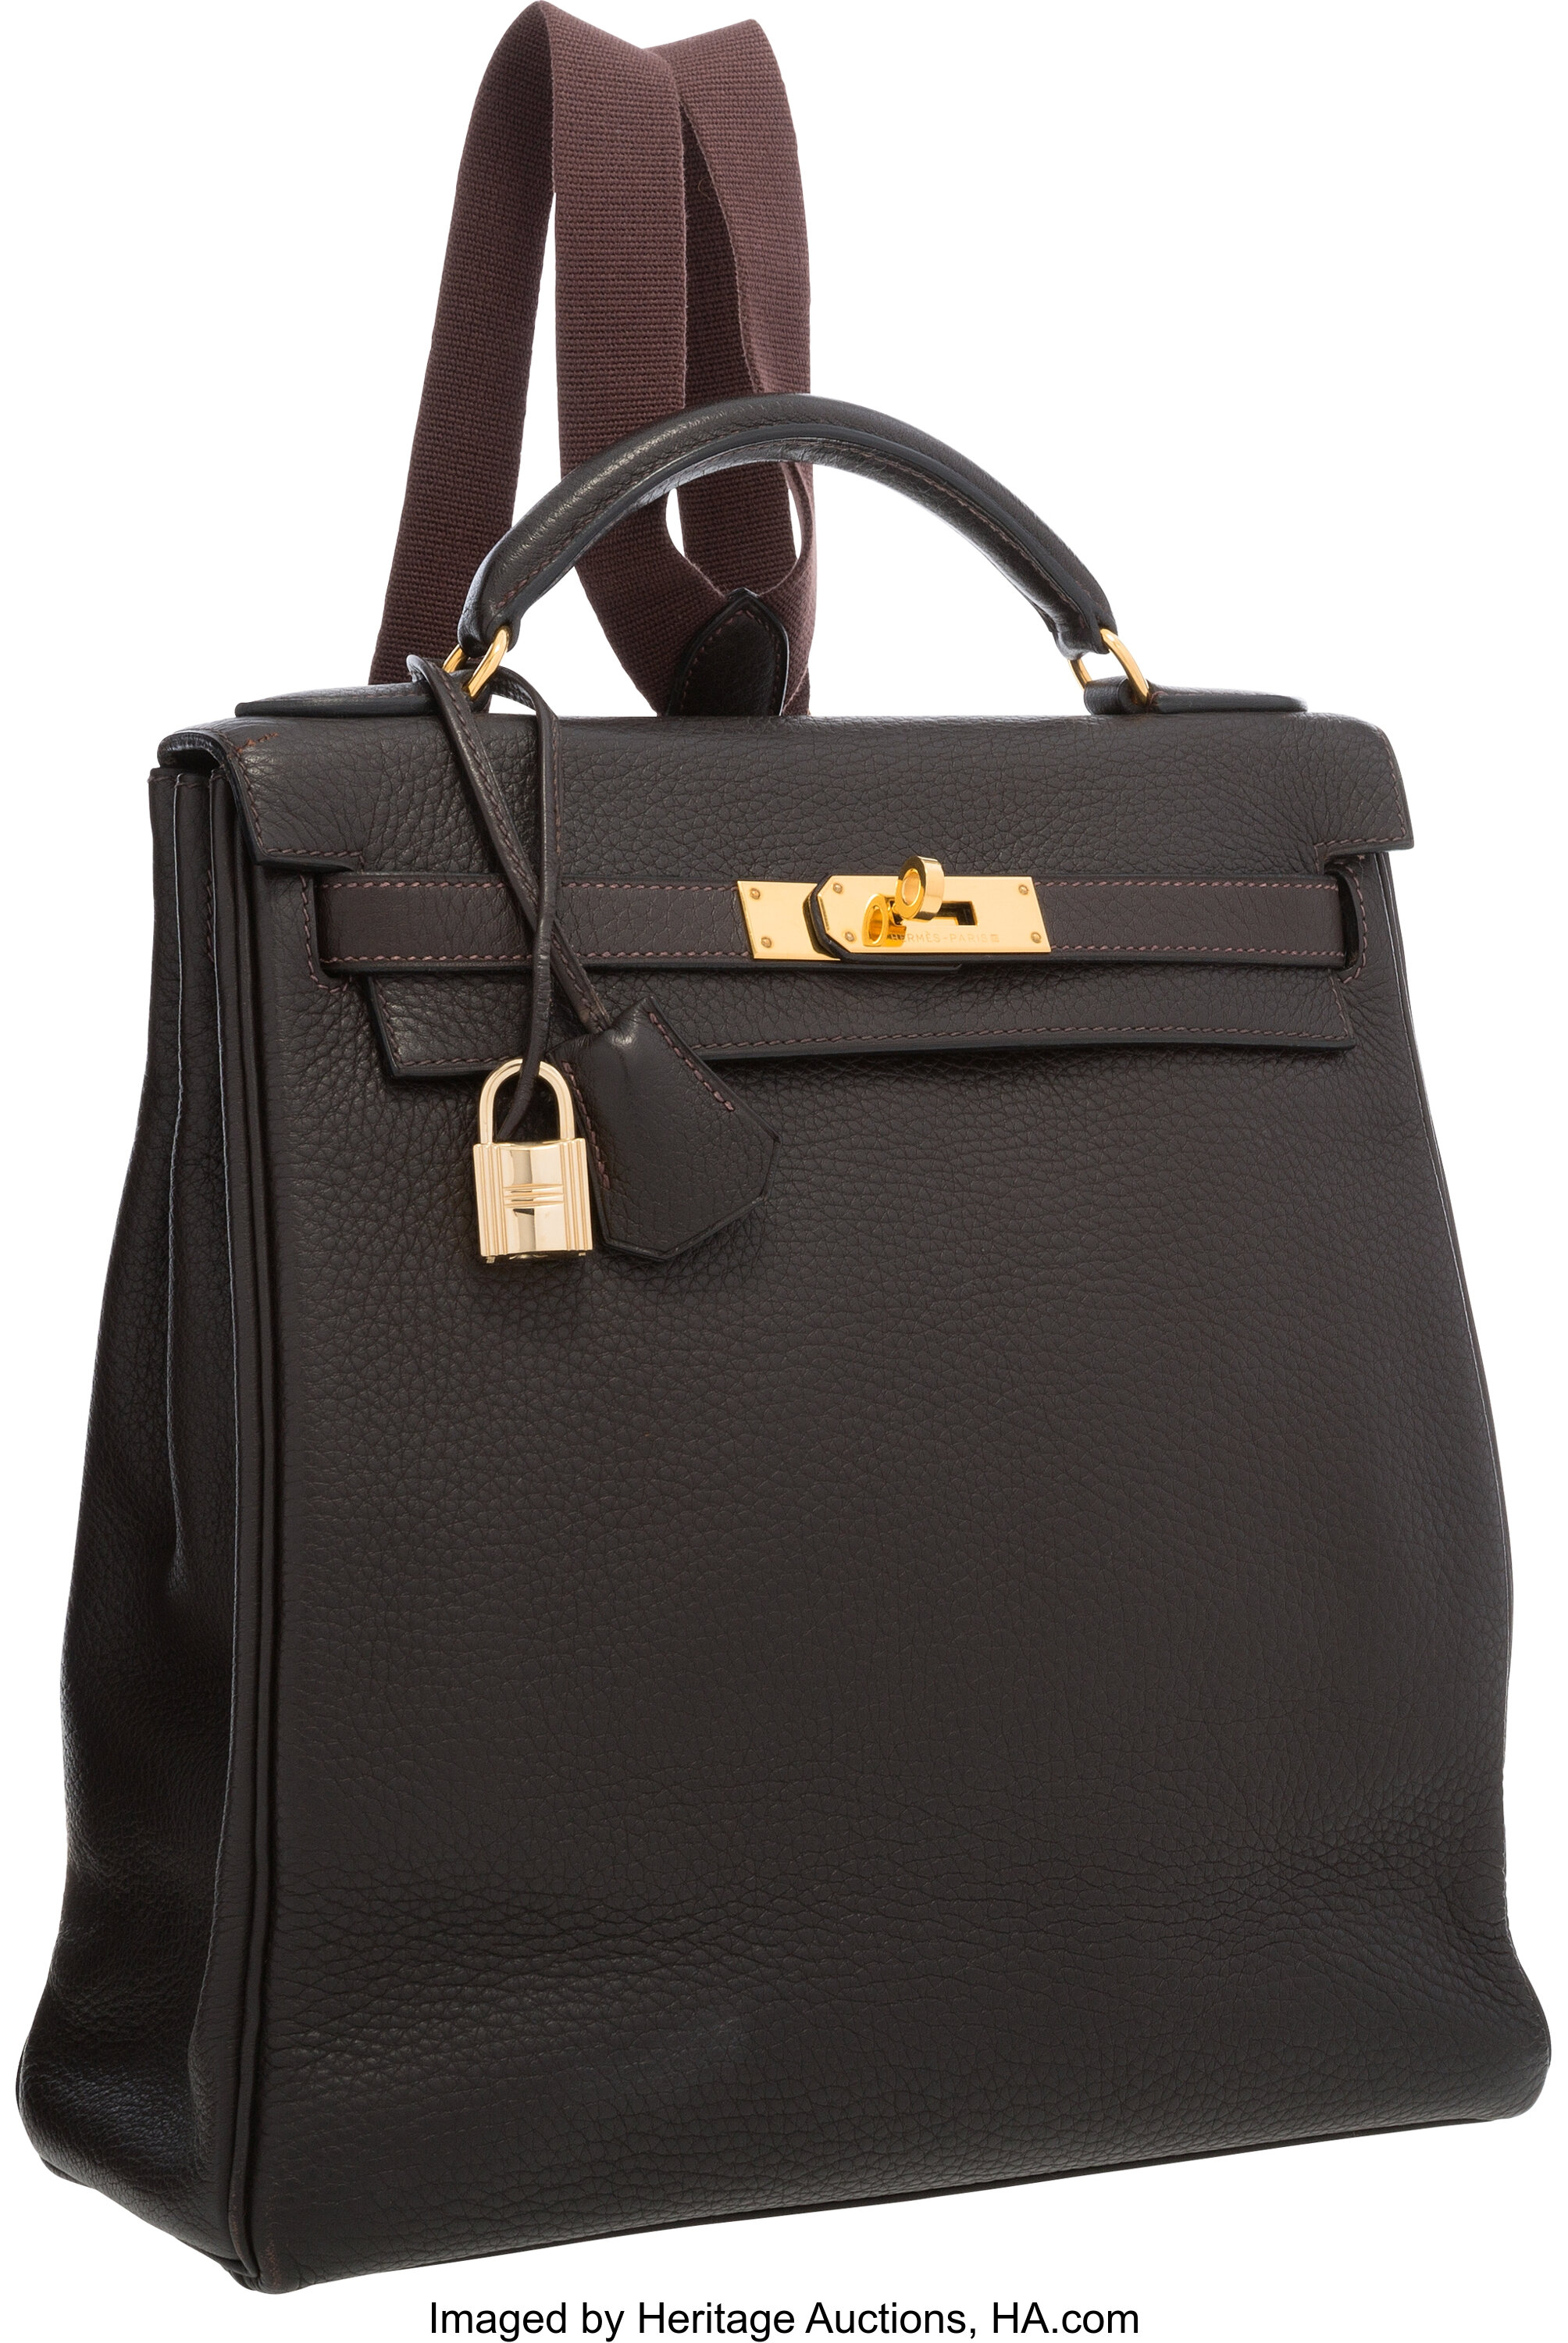 Pre order: Leather Backpack like hermes Kelly ado backpack Bag